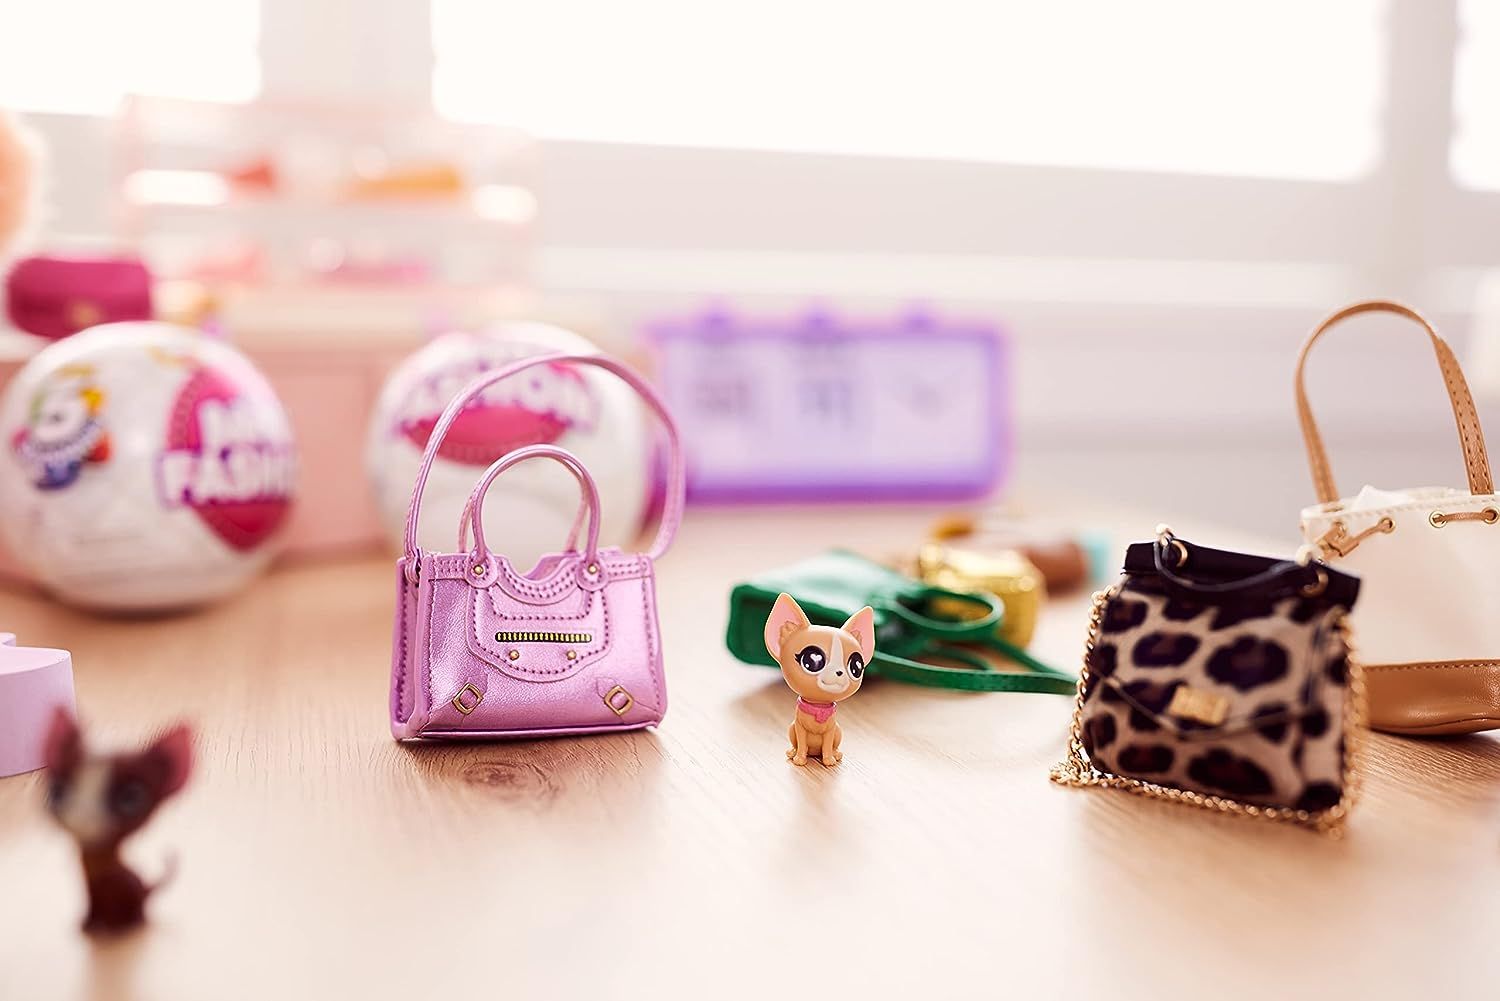 Original Zuru 5 Surprise Mini Fashion Brands Series 2 Girl Toy